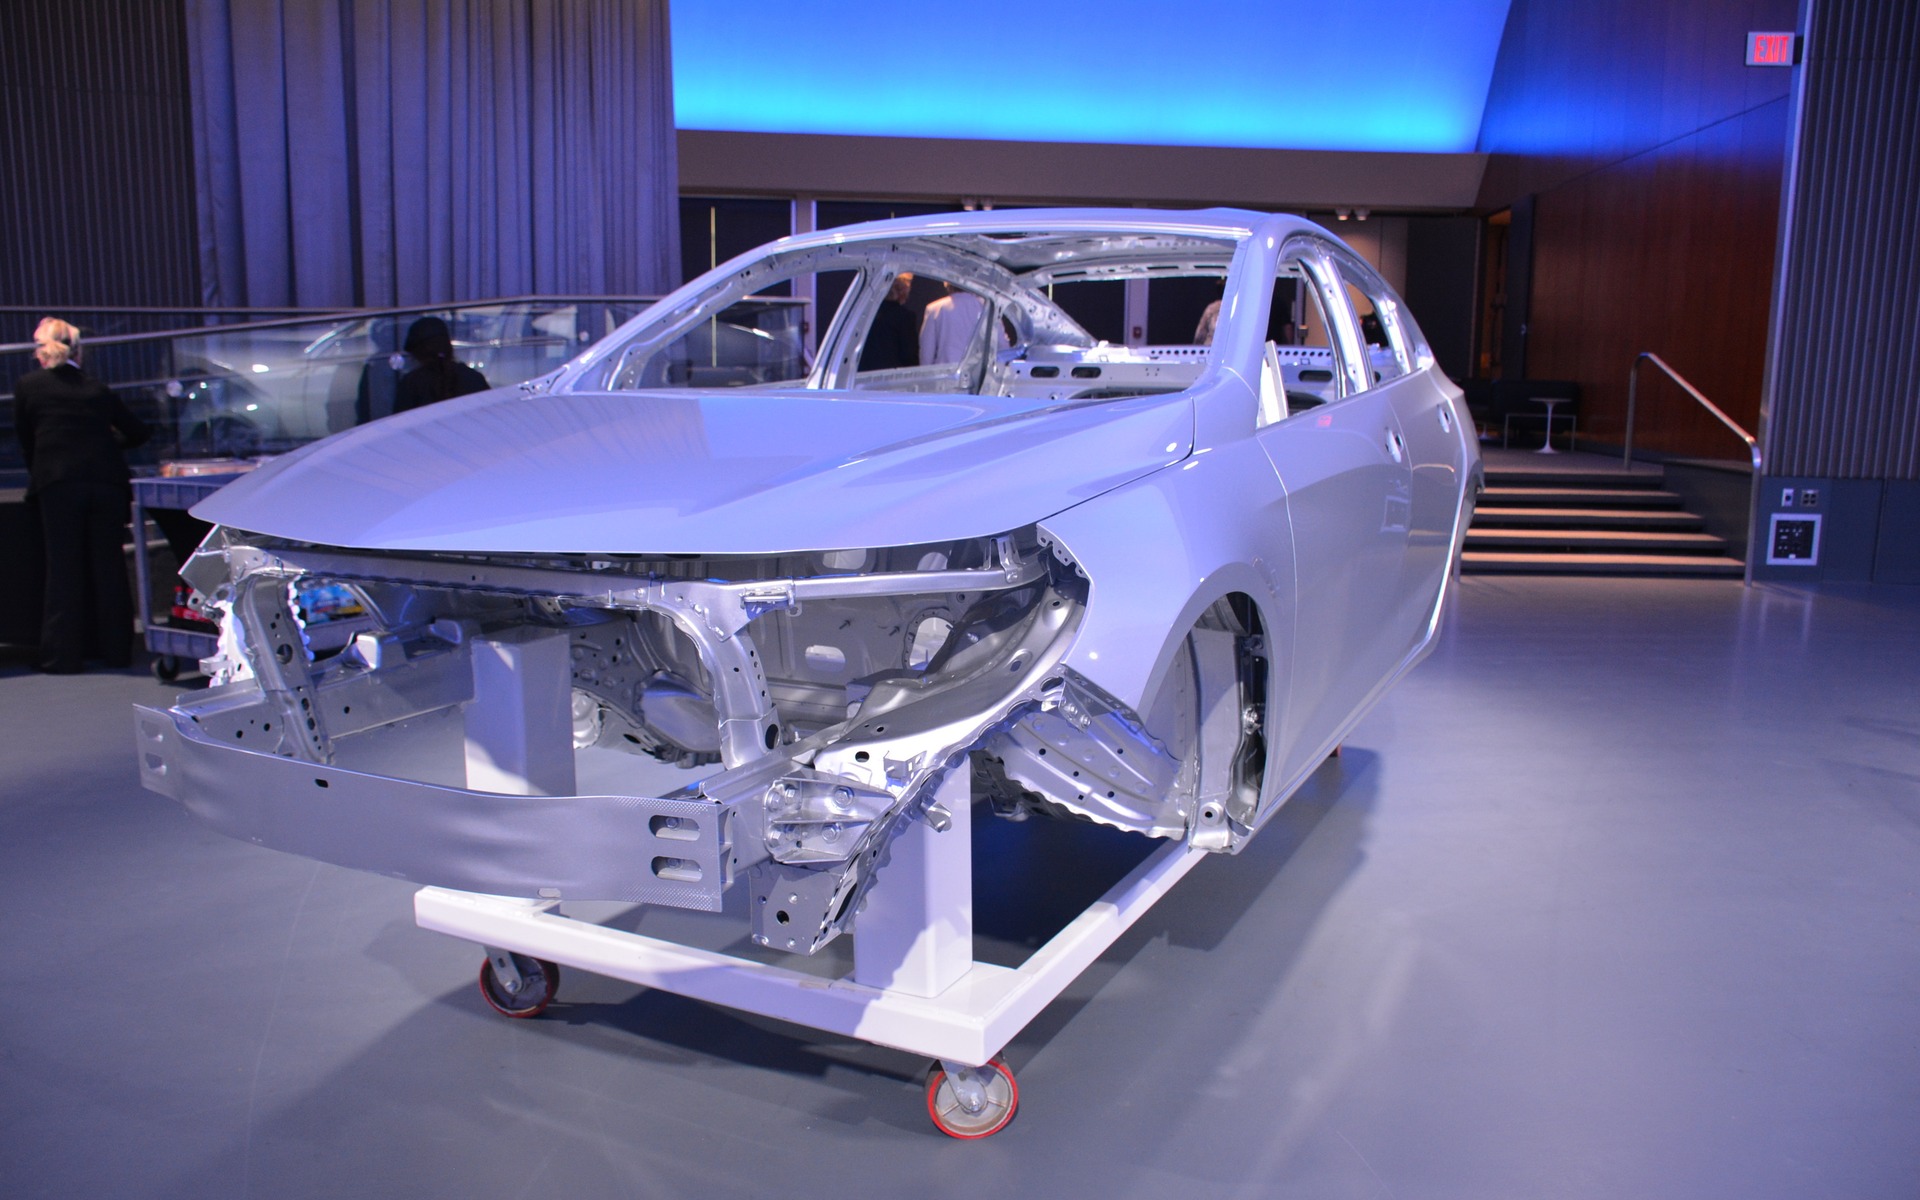 General Motors lightweight material program